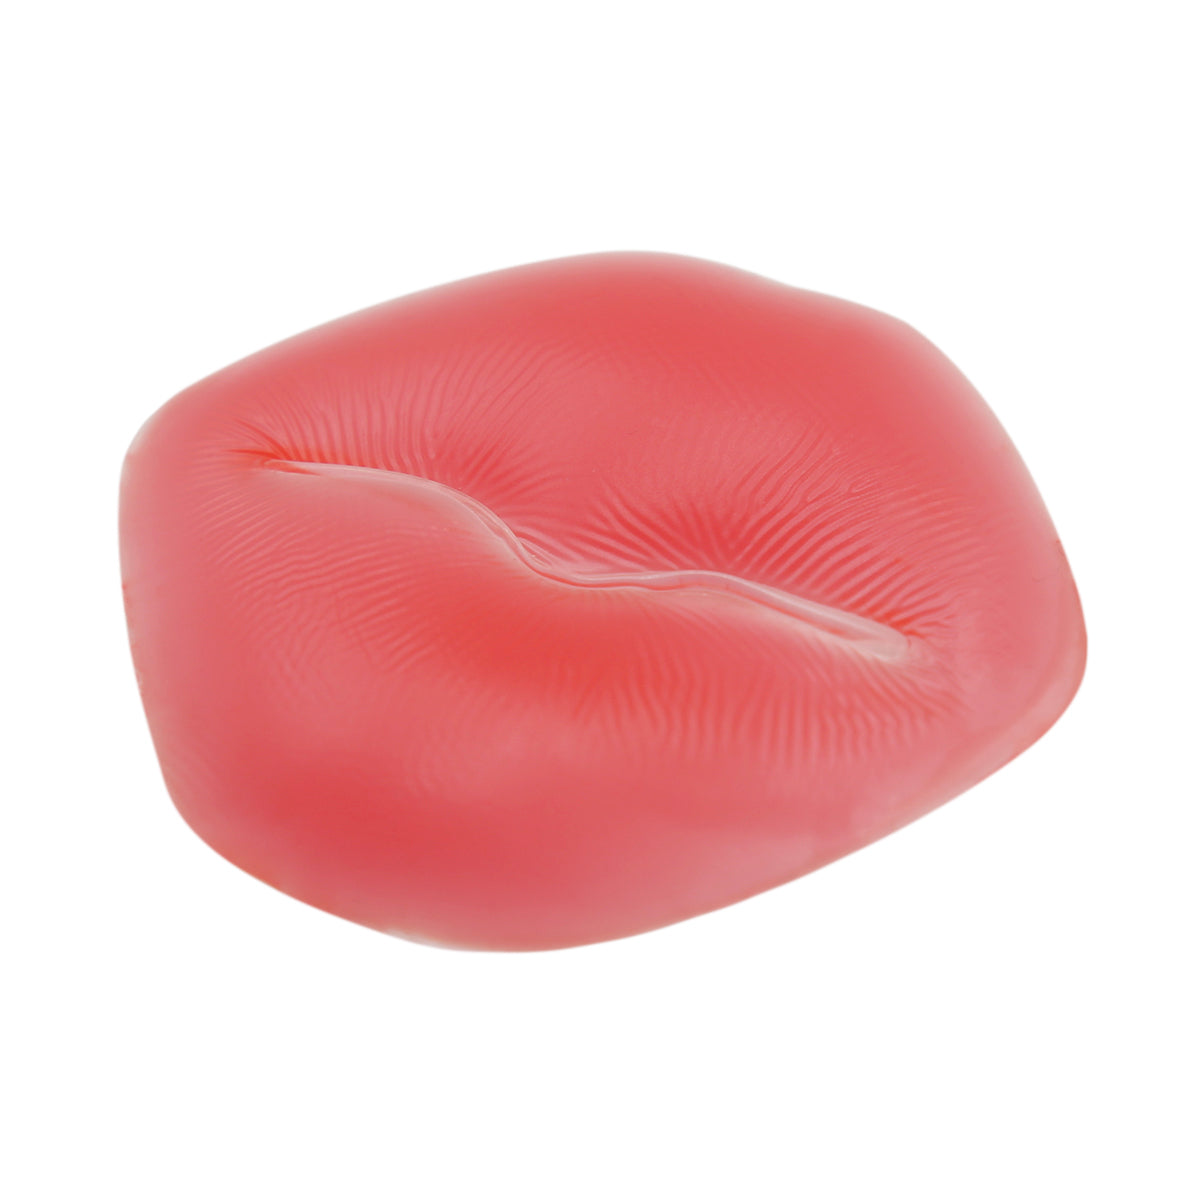 Fia - Lippen Nippel Covers aus Silikon